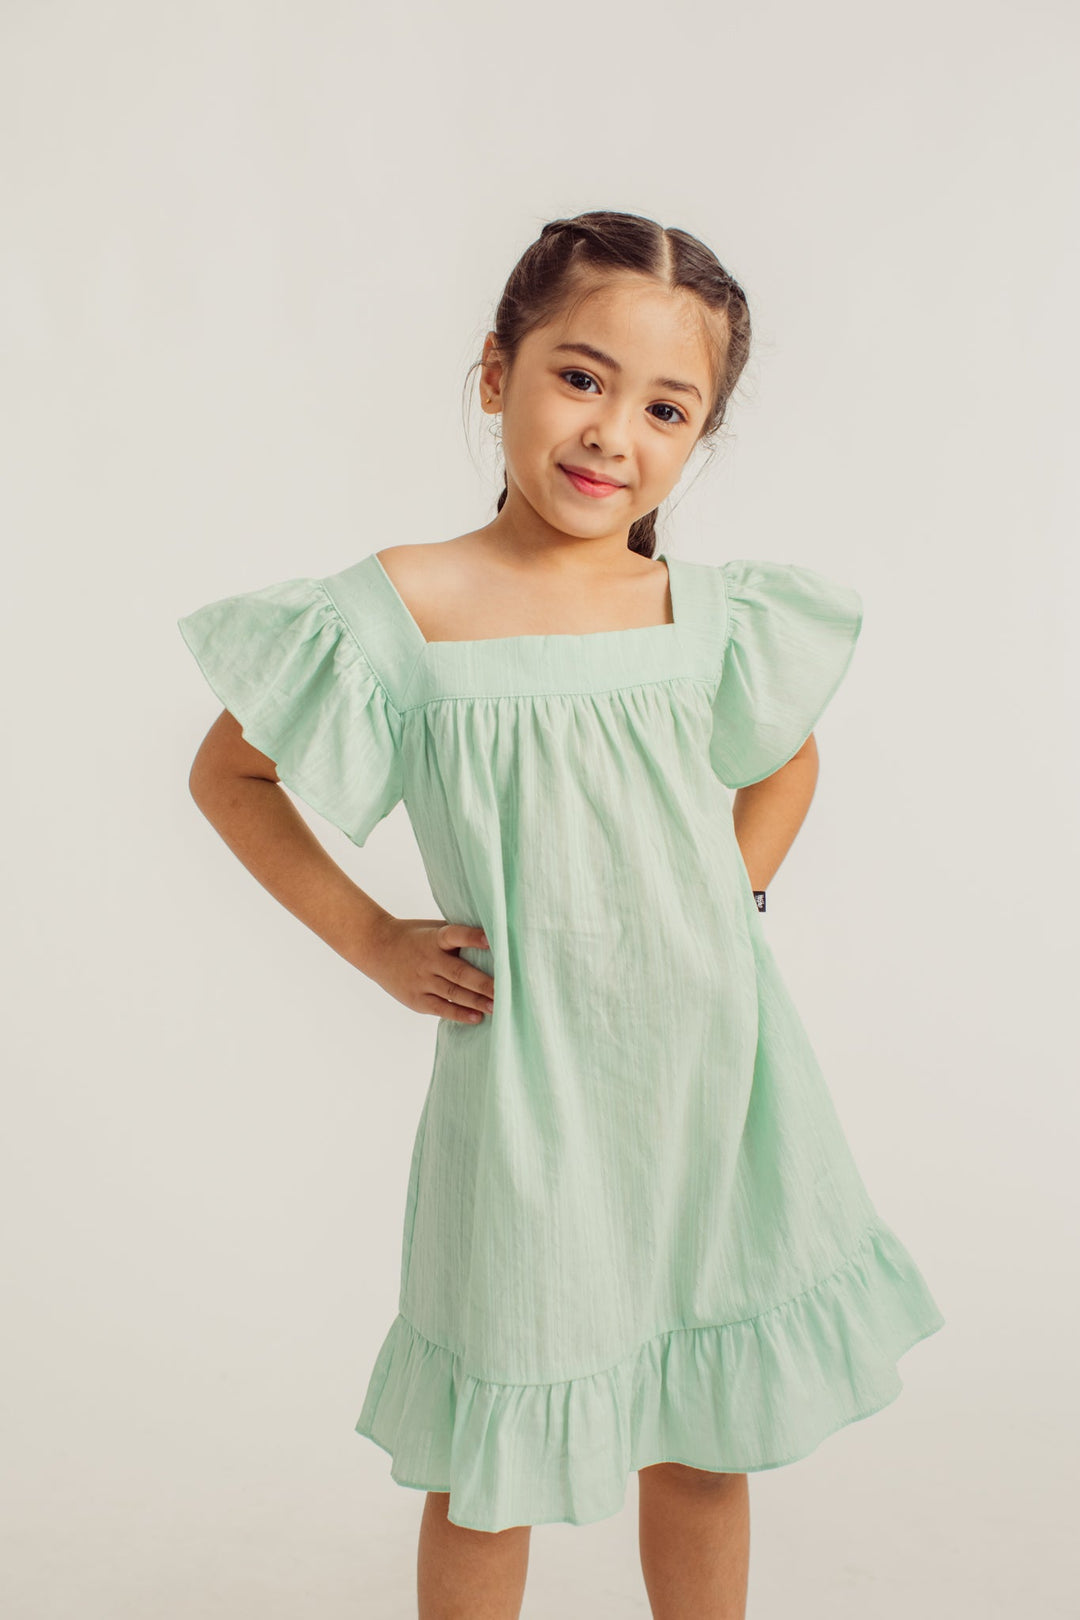 Ashley Jade Flaire Dress Kids Girls - Mossimo PH